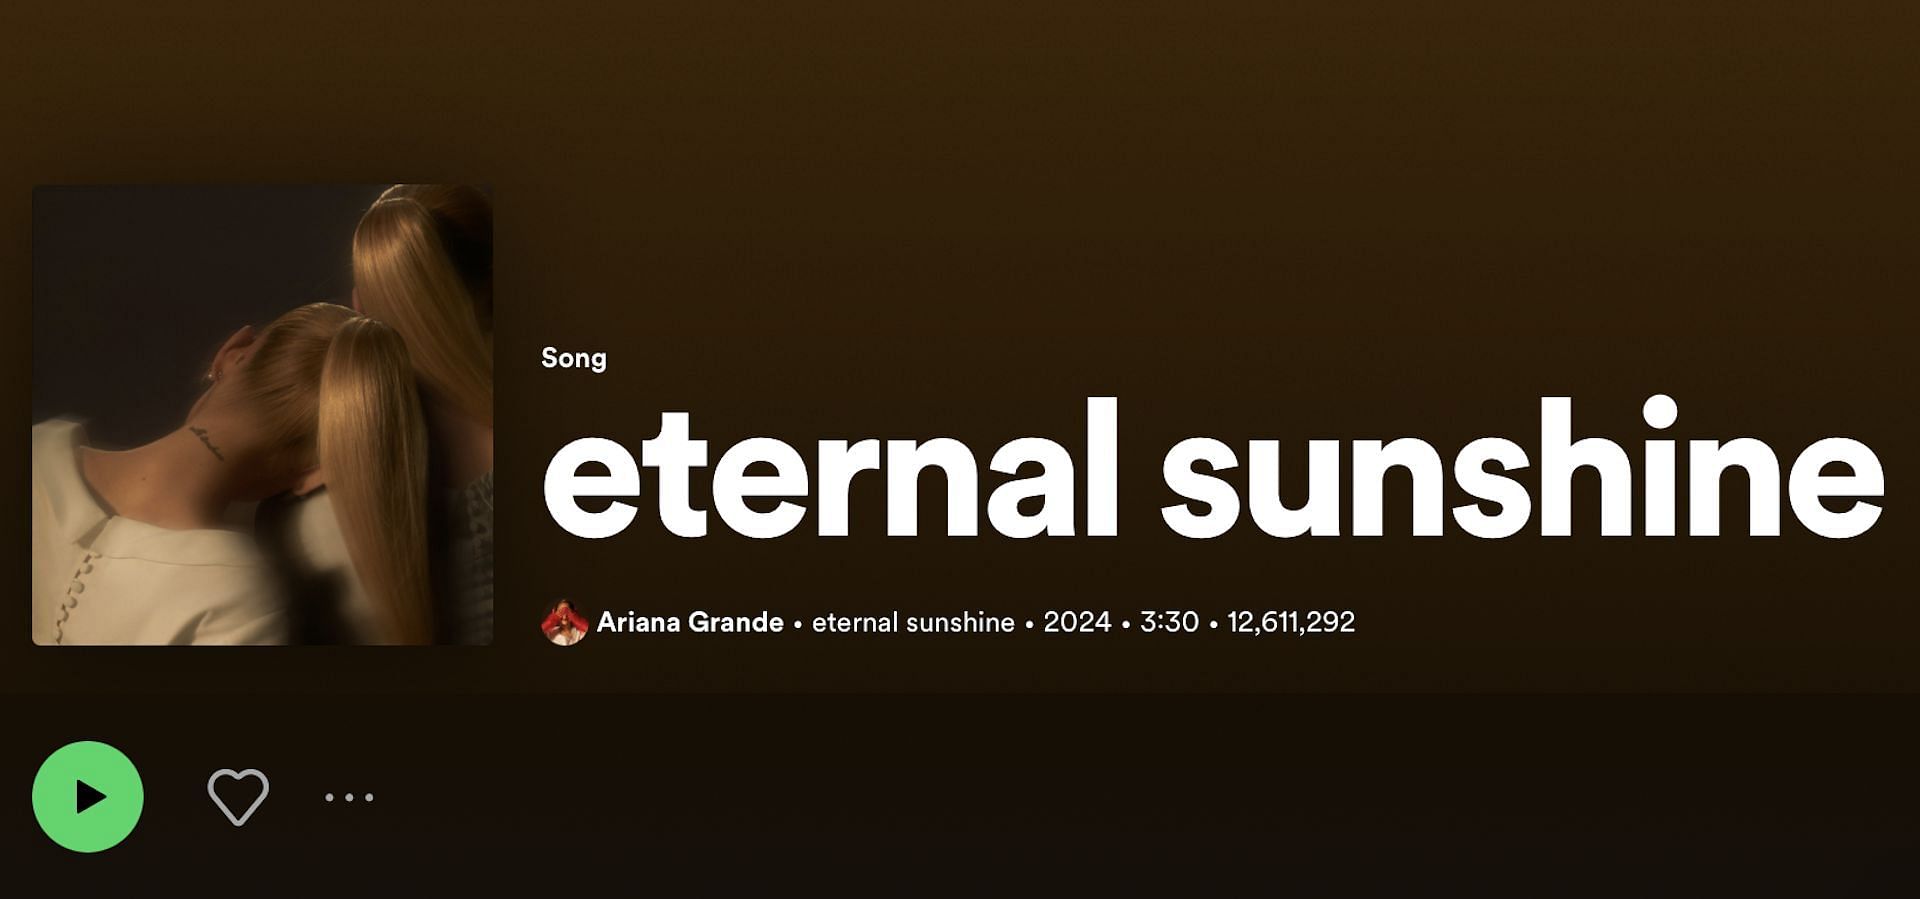 Track 5 of Ariana Grande&#039;s seventh studio album &#039;Eternal Sunshine&#039; (Image via Spotify)